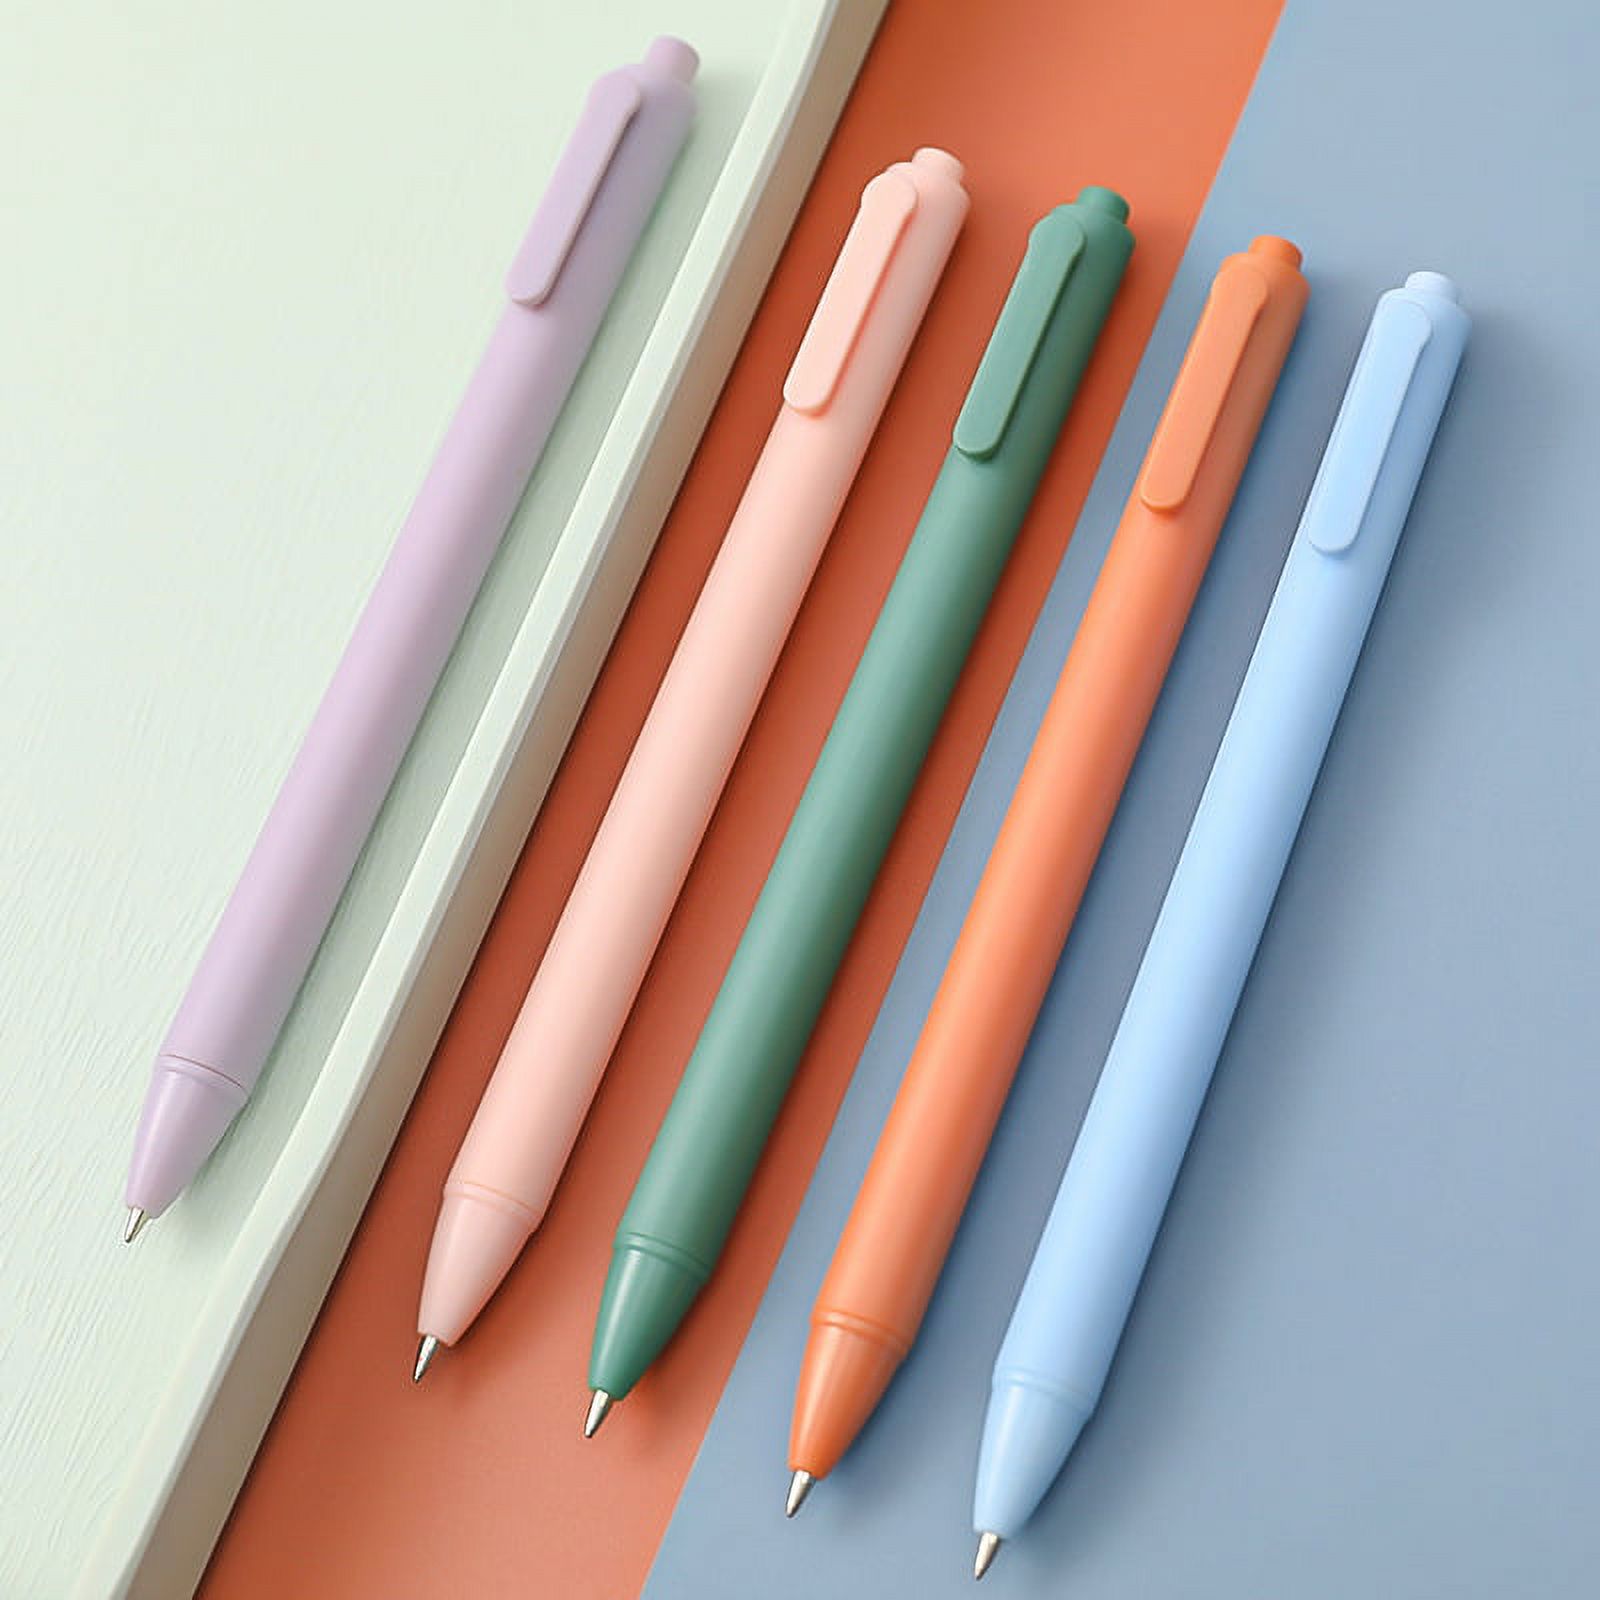 OBOSOE 20 Retractable Ballpoint Pen Refills For Gifts,Business,Office,0.5mm Black Ink,20 Replaceable Metal Refills - image 1 of 7